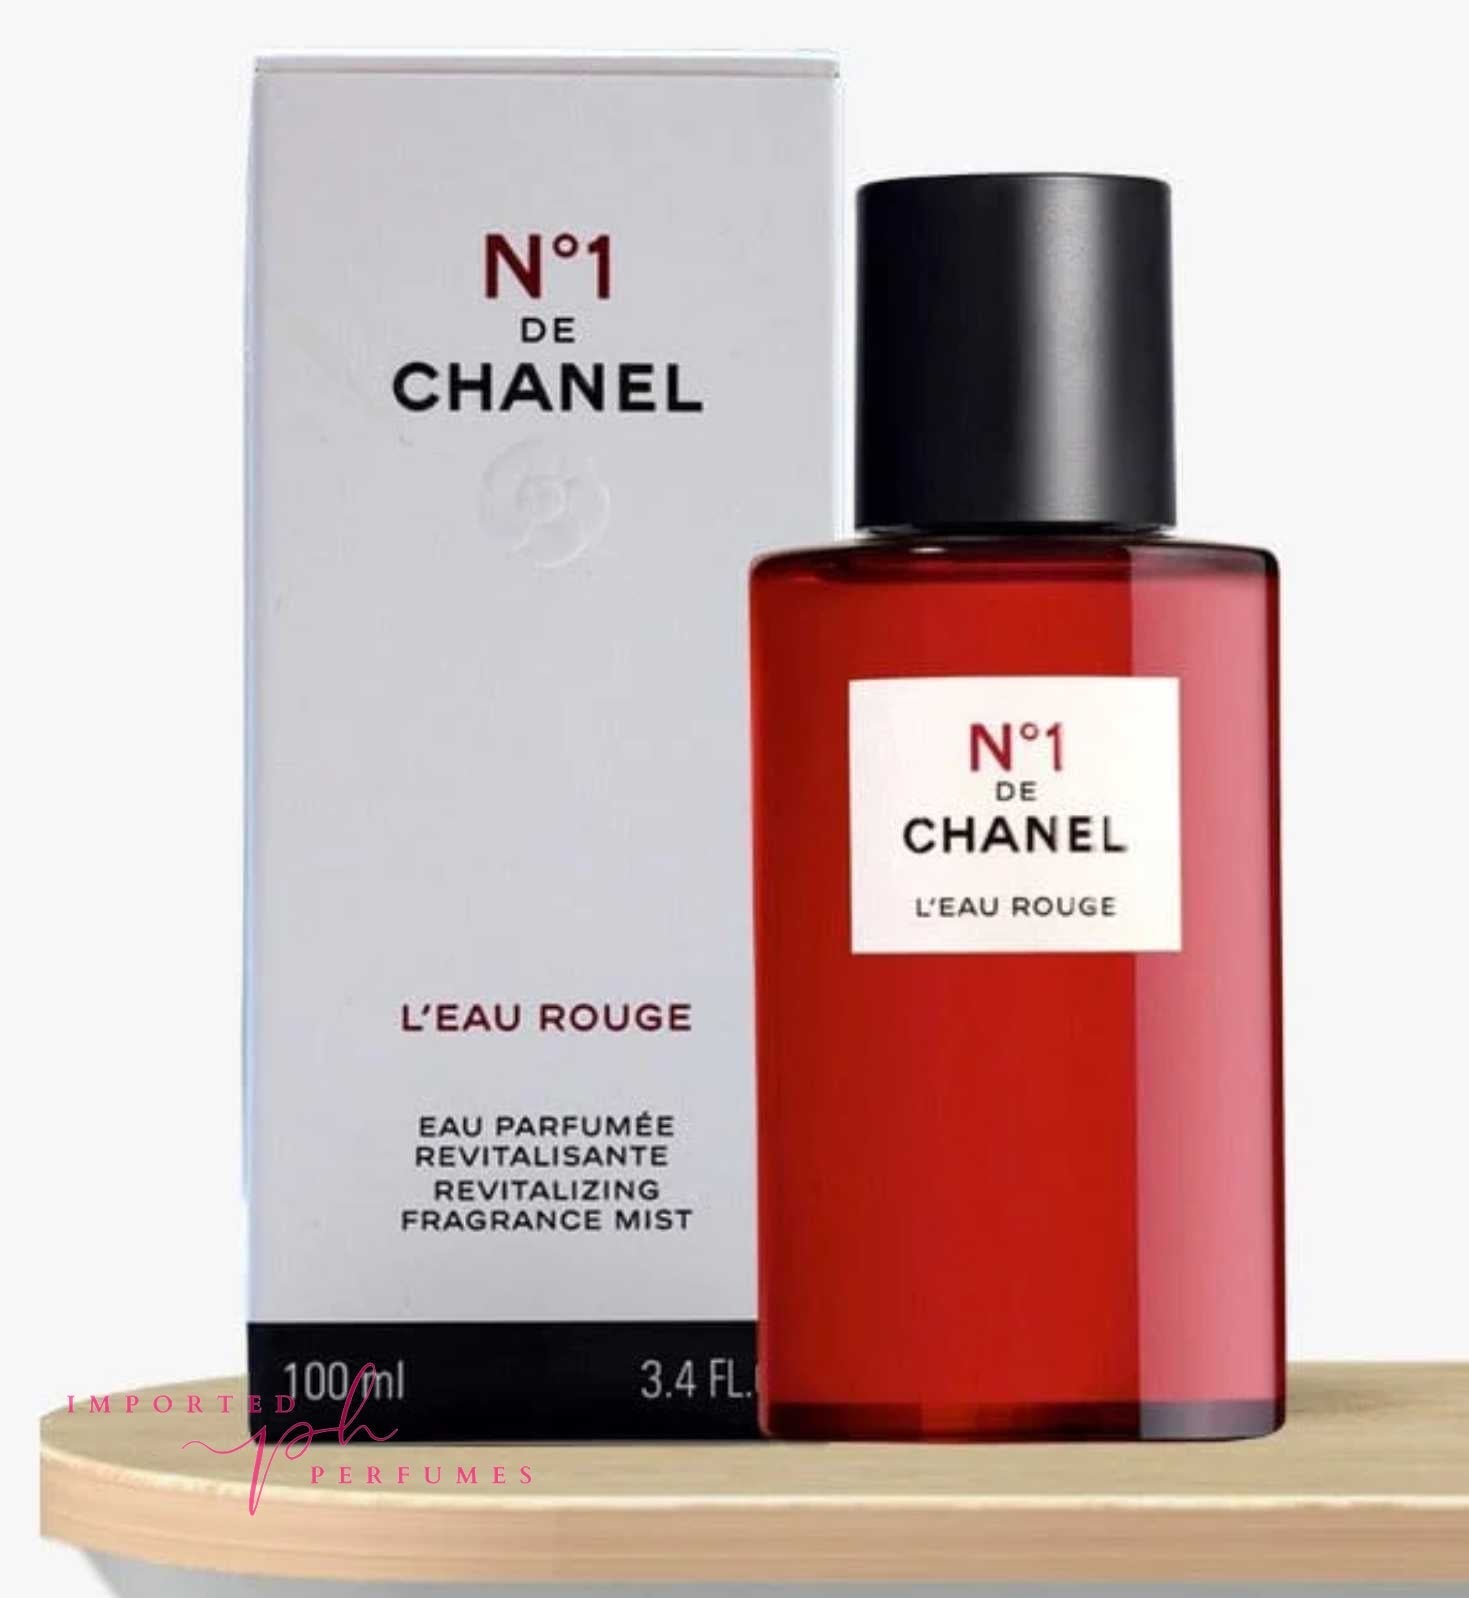  BC Perfume 546 Impression of Baccarat 540 For Women Men Spray  + Body Oil Set Eau de Parfum Cologne / Rouge Type Replica Fragrance Travel  Sample Size Bottle / 10ml+50ml… 